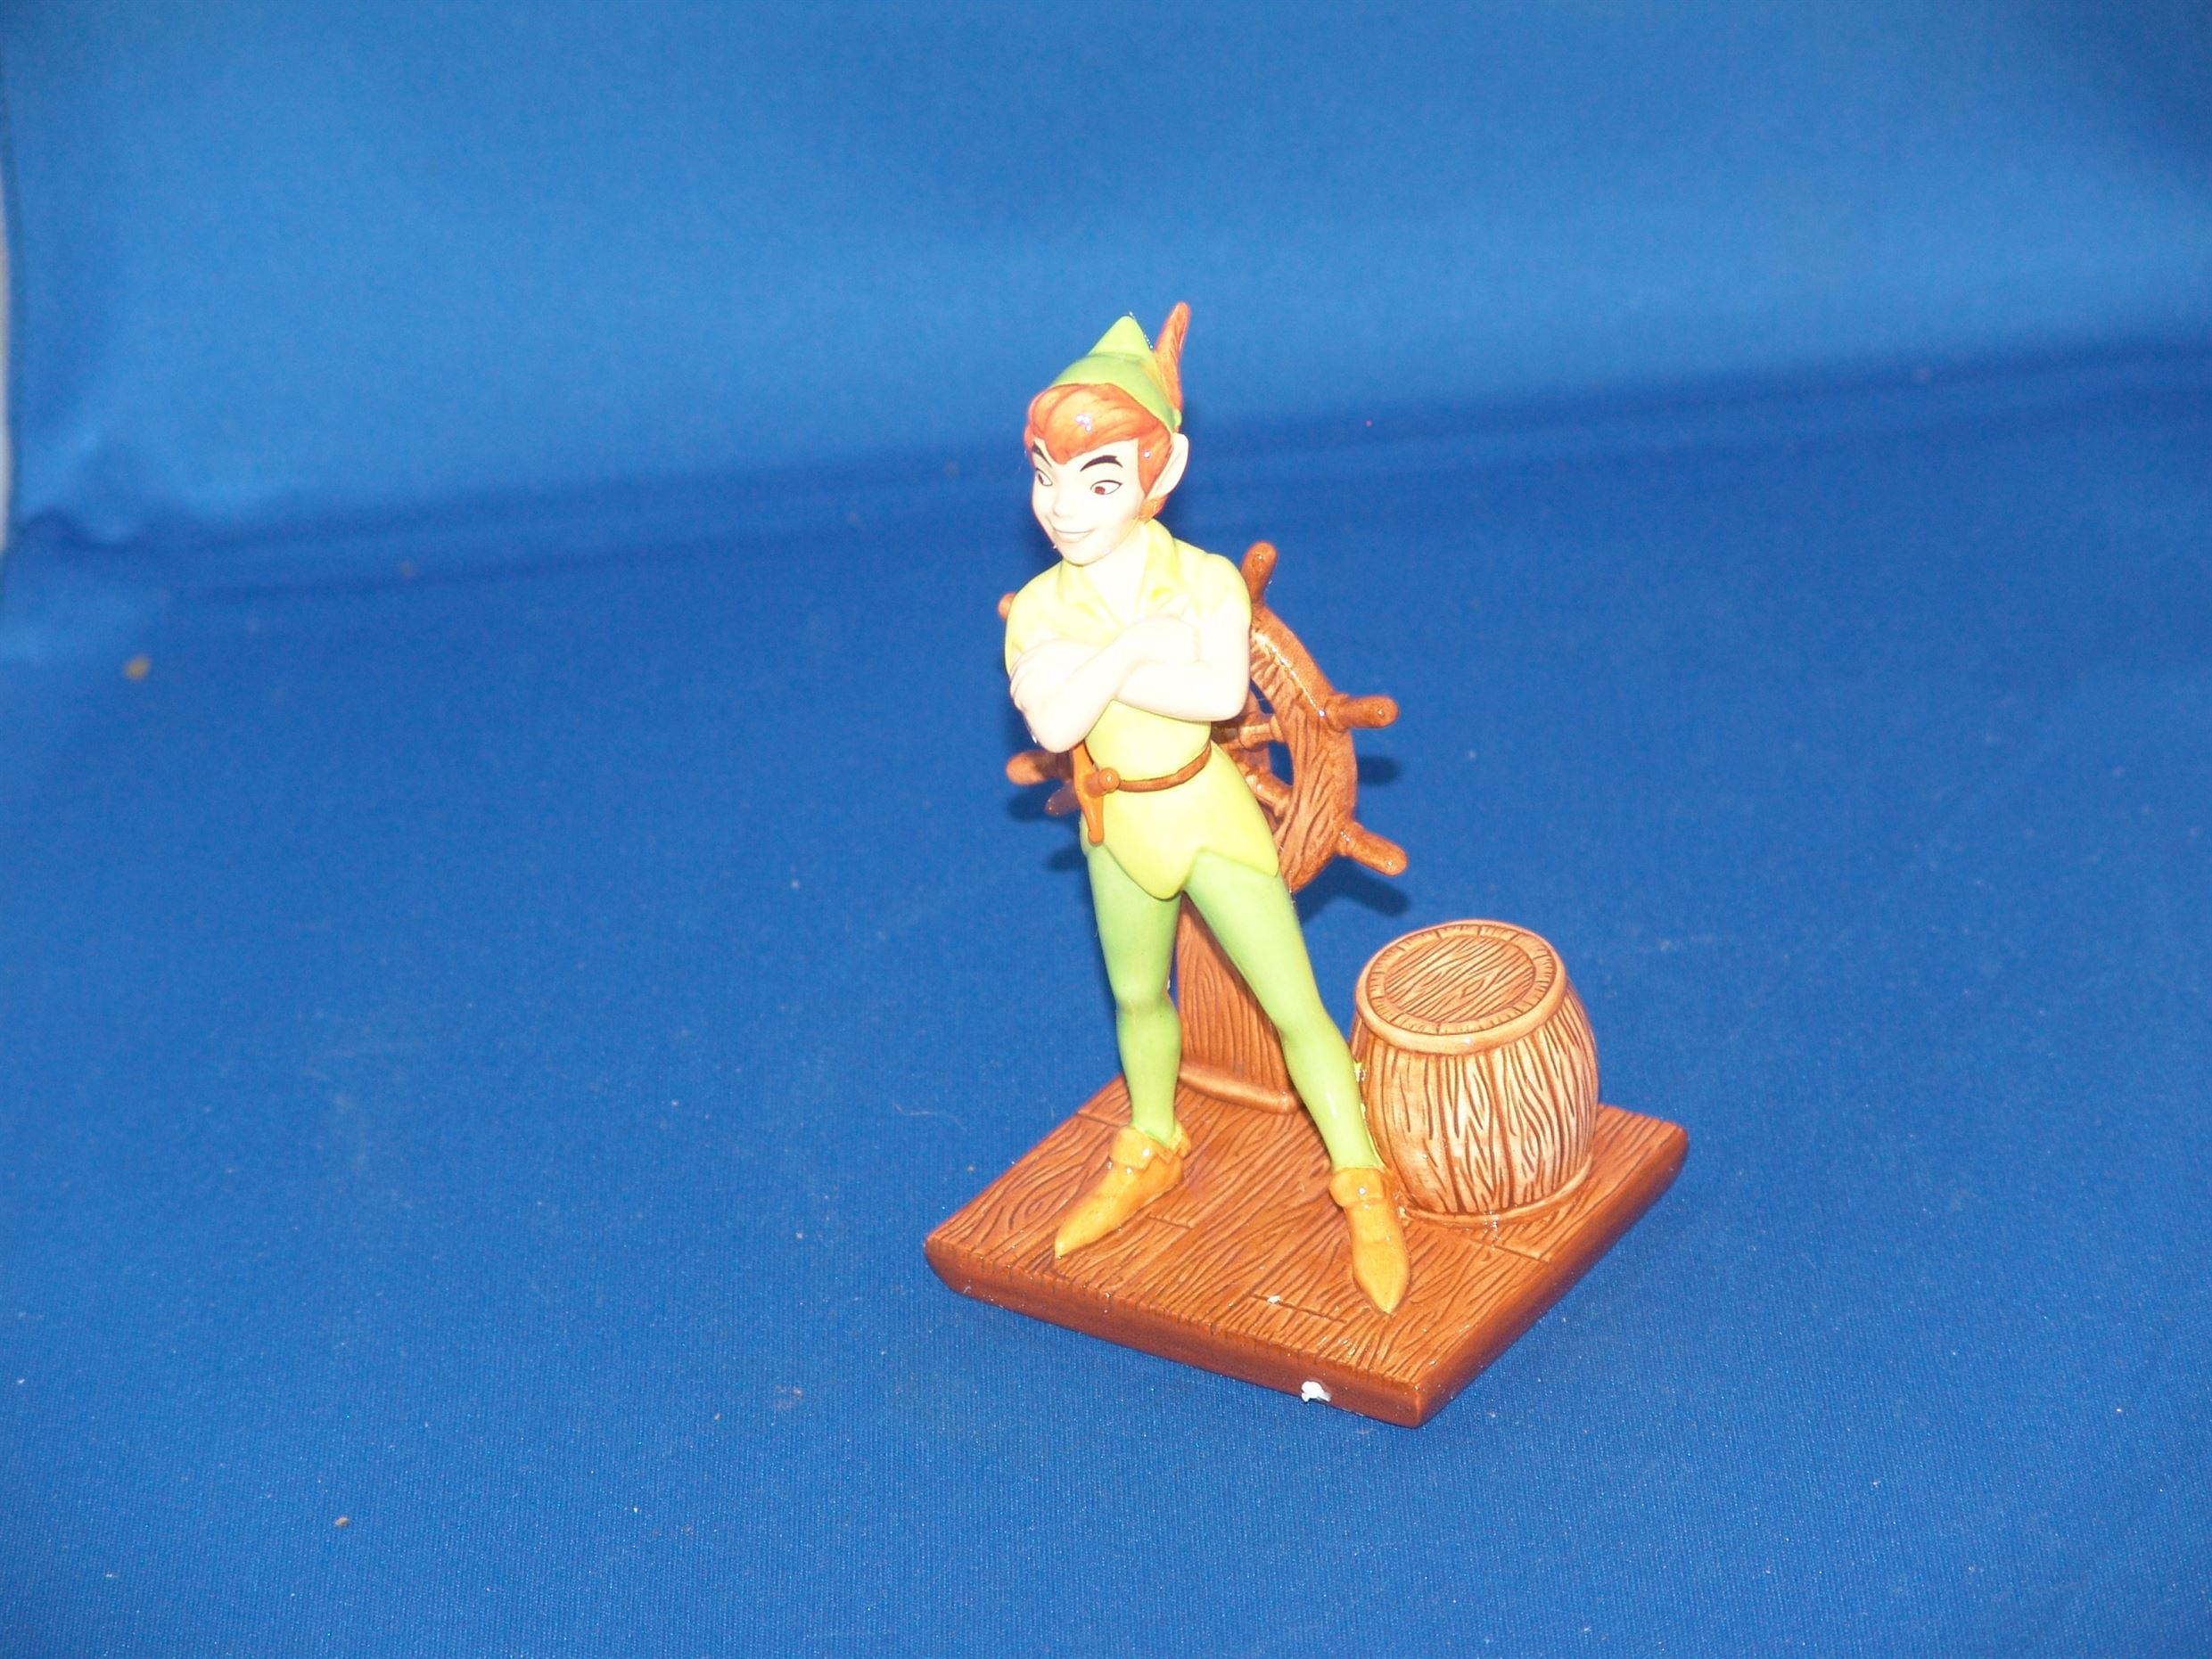 Peter pan figurine